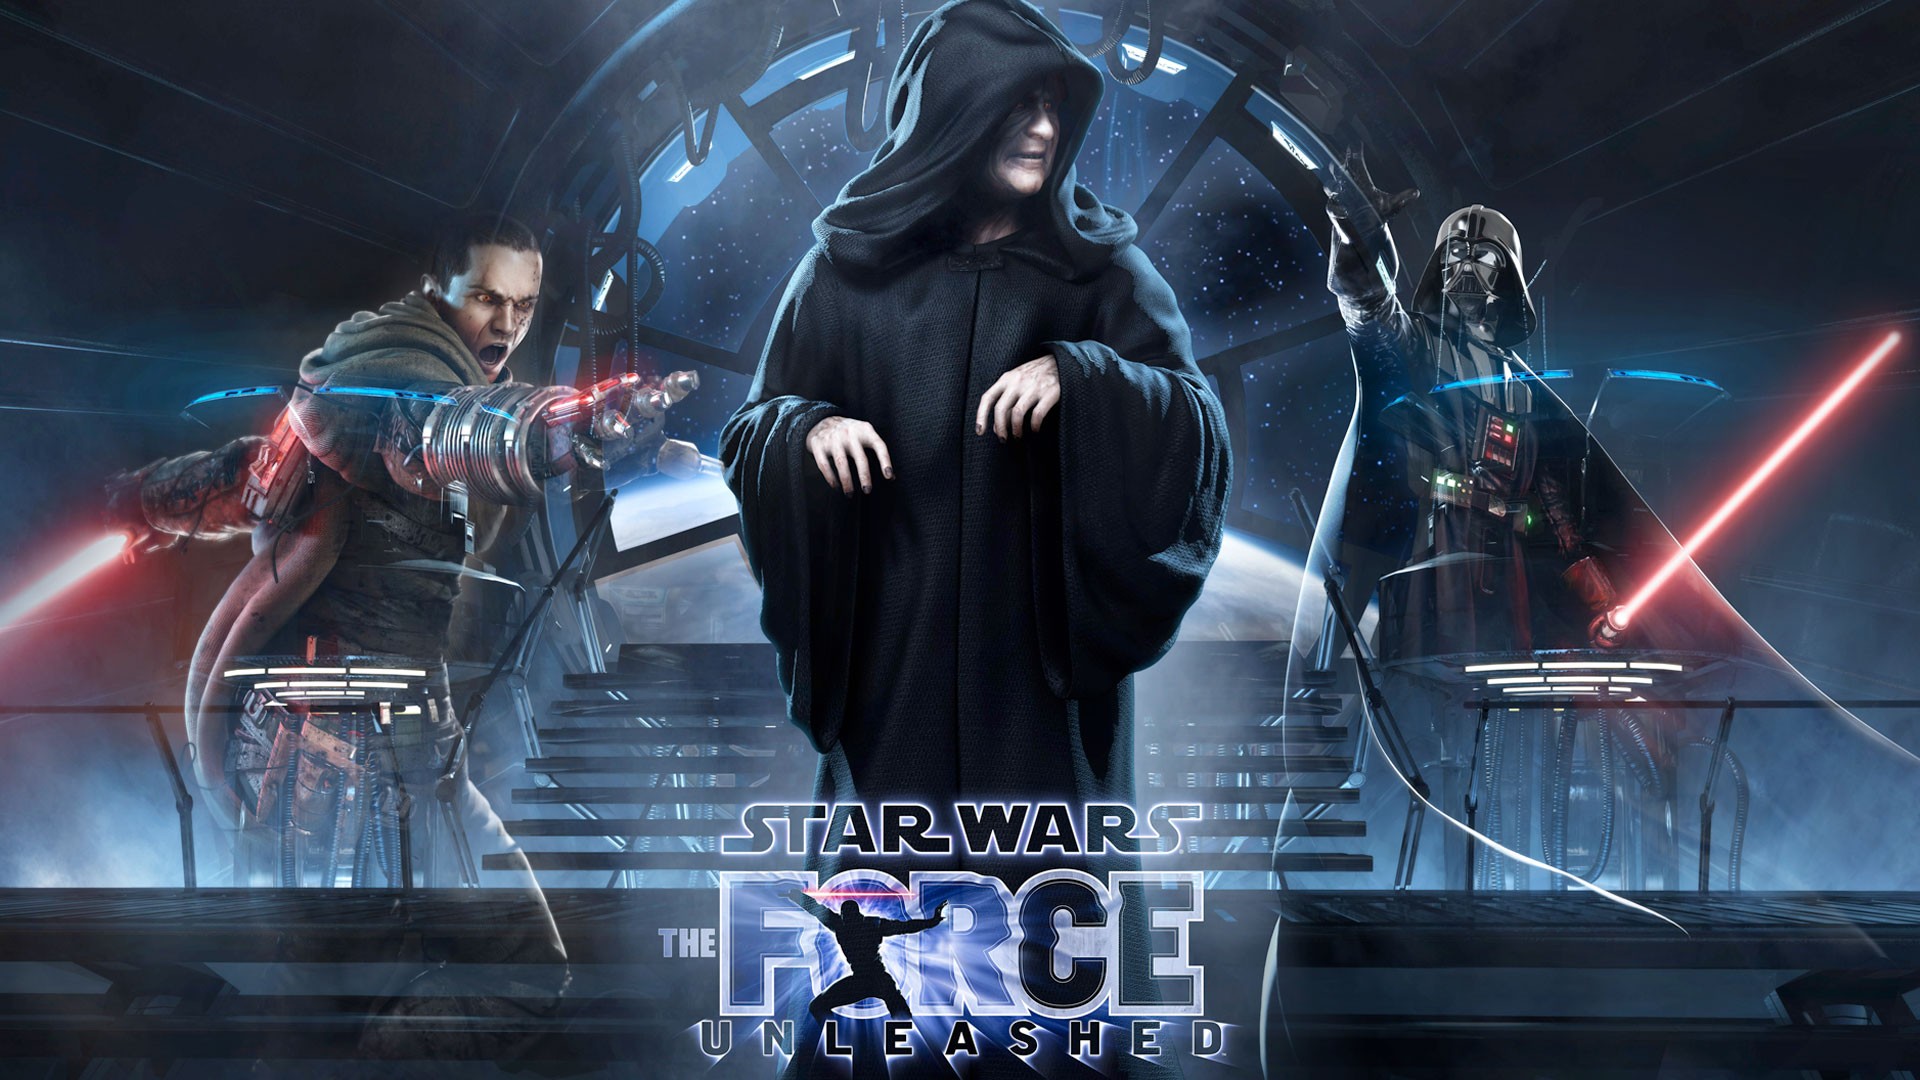 Star Wars Video Games Star Wars Villains Lightsaber Video Game Art Star Wars The Force Unleashed 1920x1080